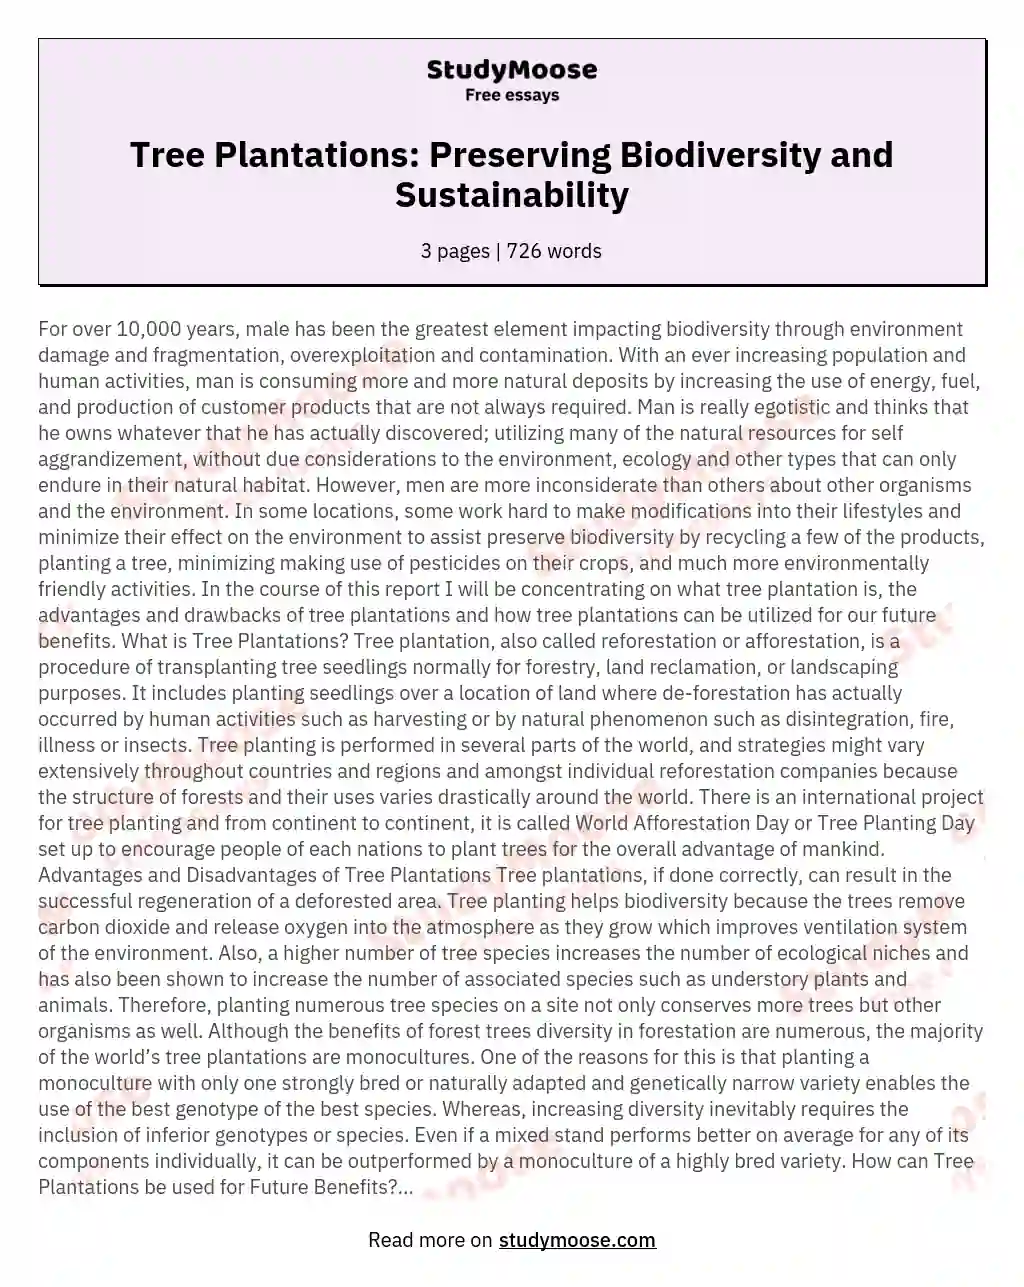 Tree Plantations: Preserving Biodiversity and Sustainability essay